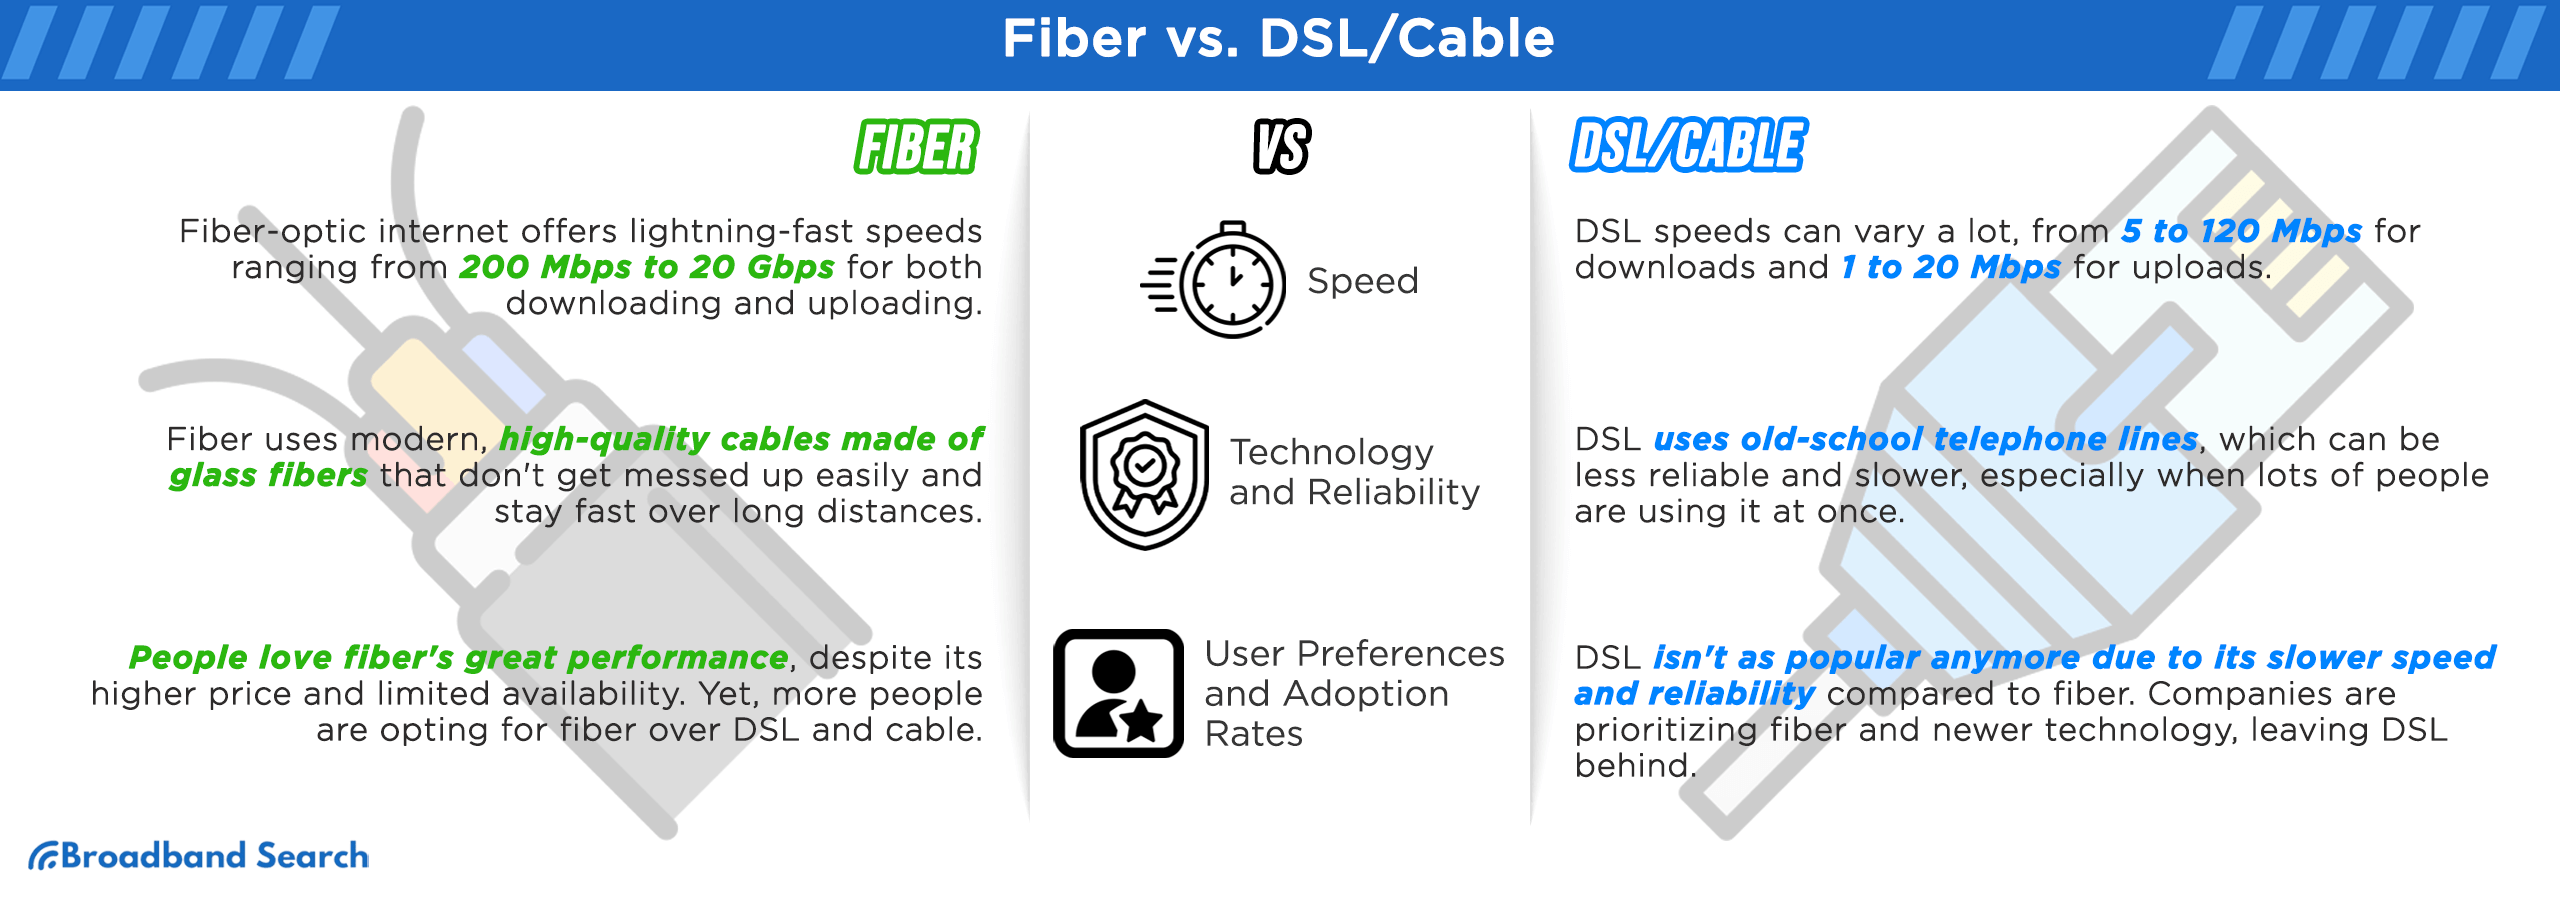 Fiber vs DSL and Cable